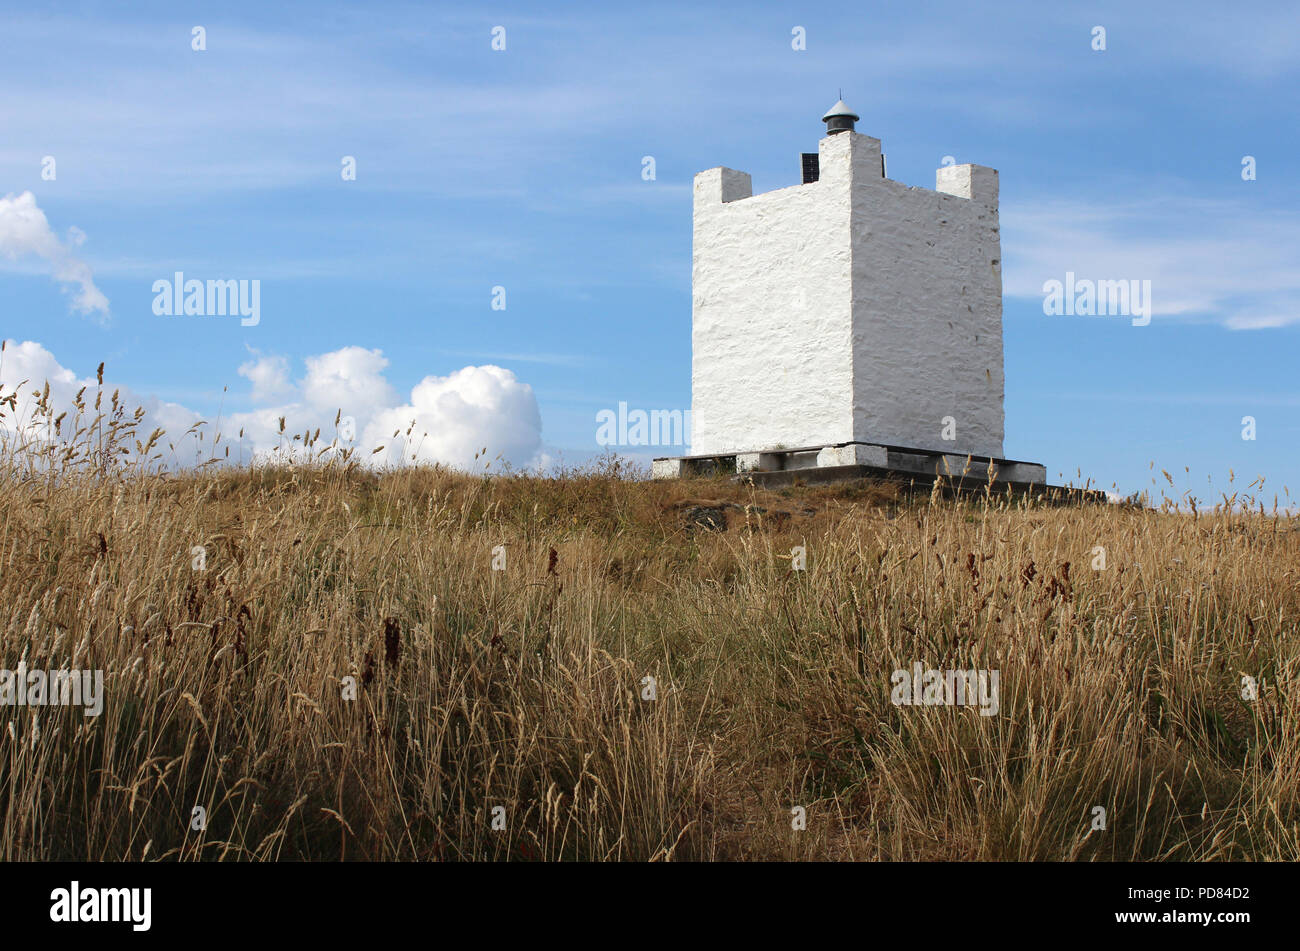 Il bianco Isola di Whithorn Torre a stirking landmark trovato presso l'isola di Whithorn in Dumfries and Galloway in Scozia. Foto Stock